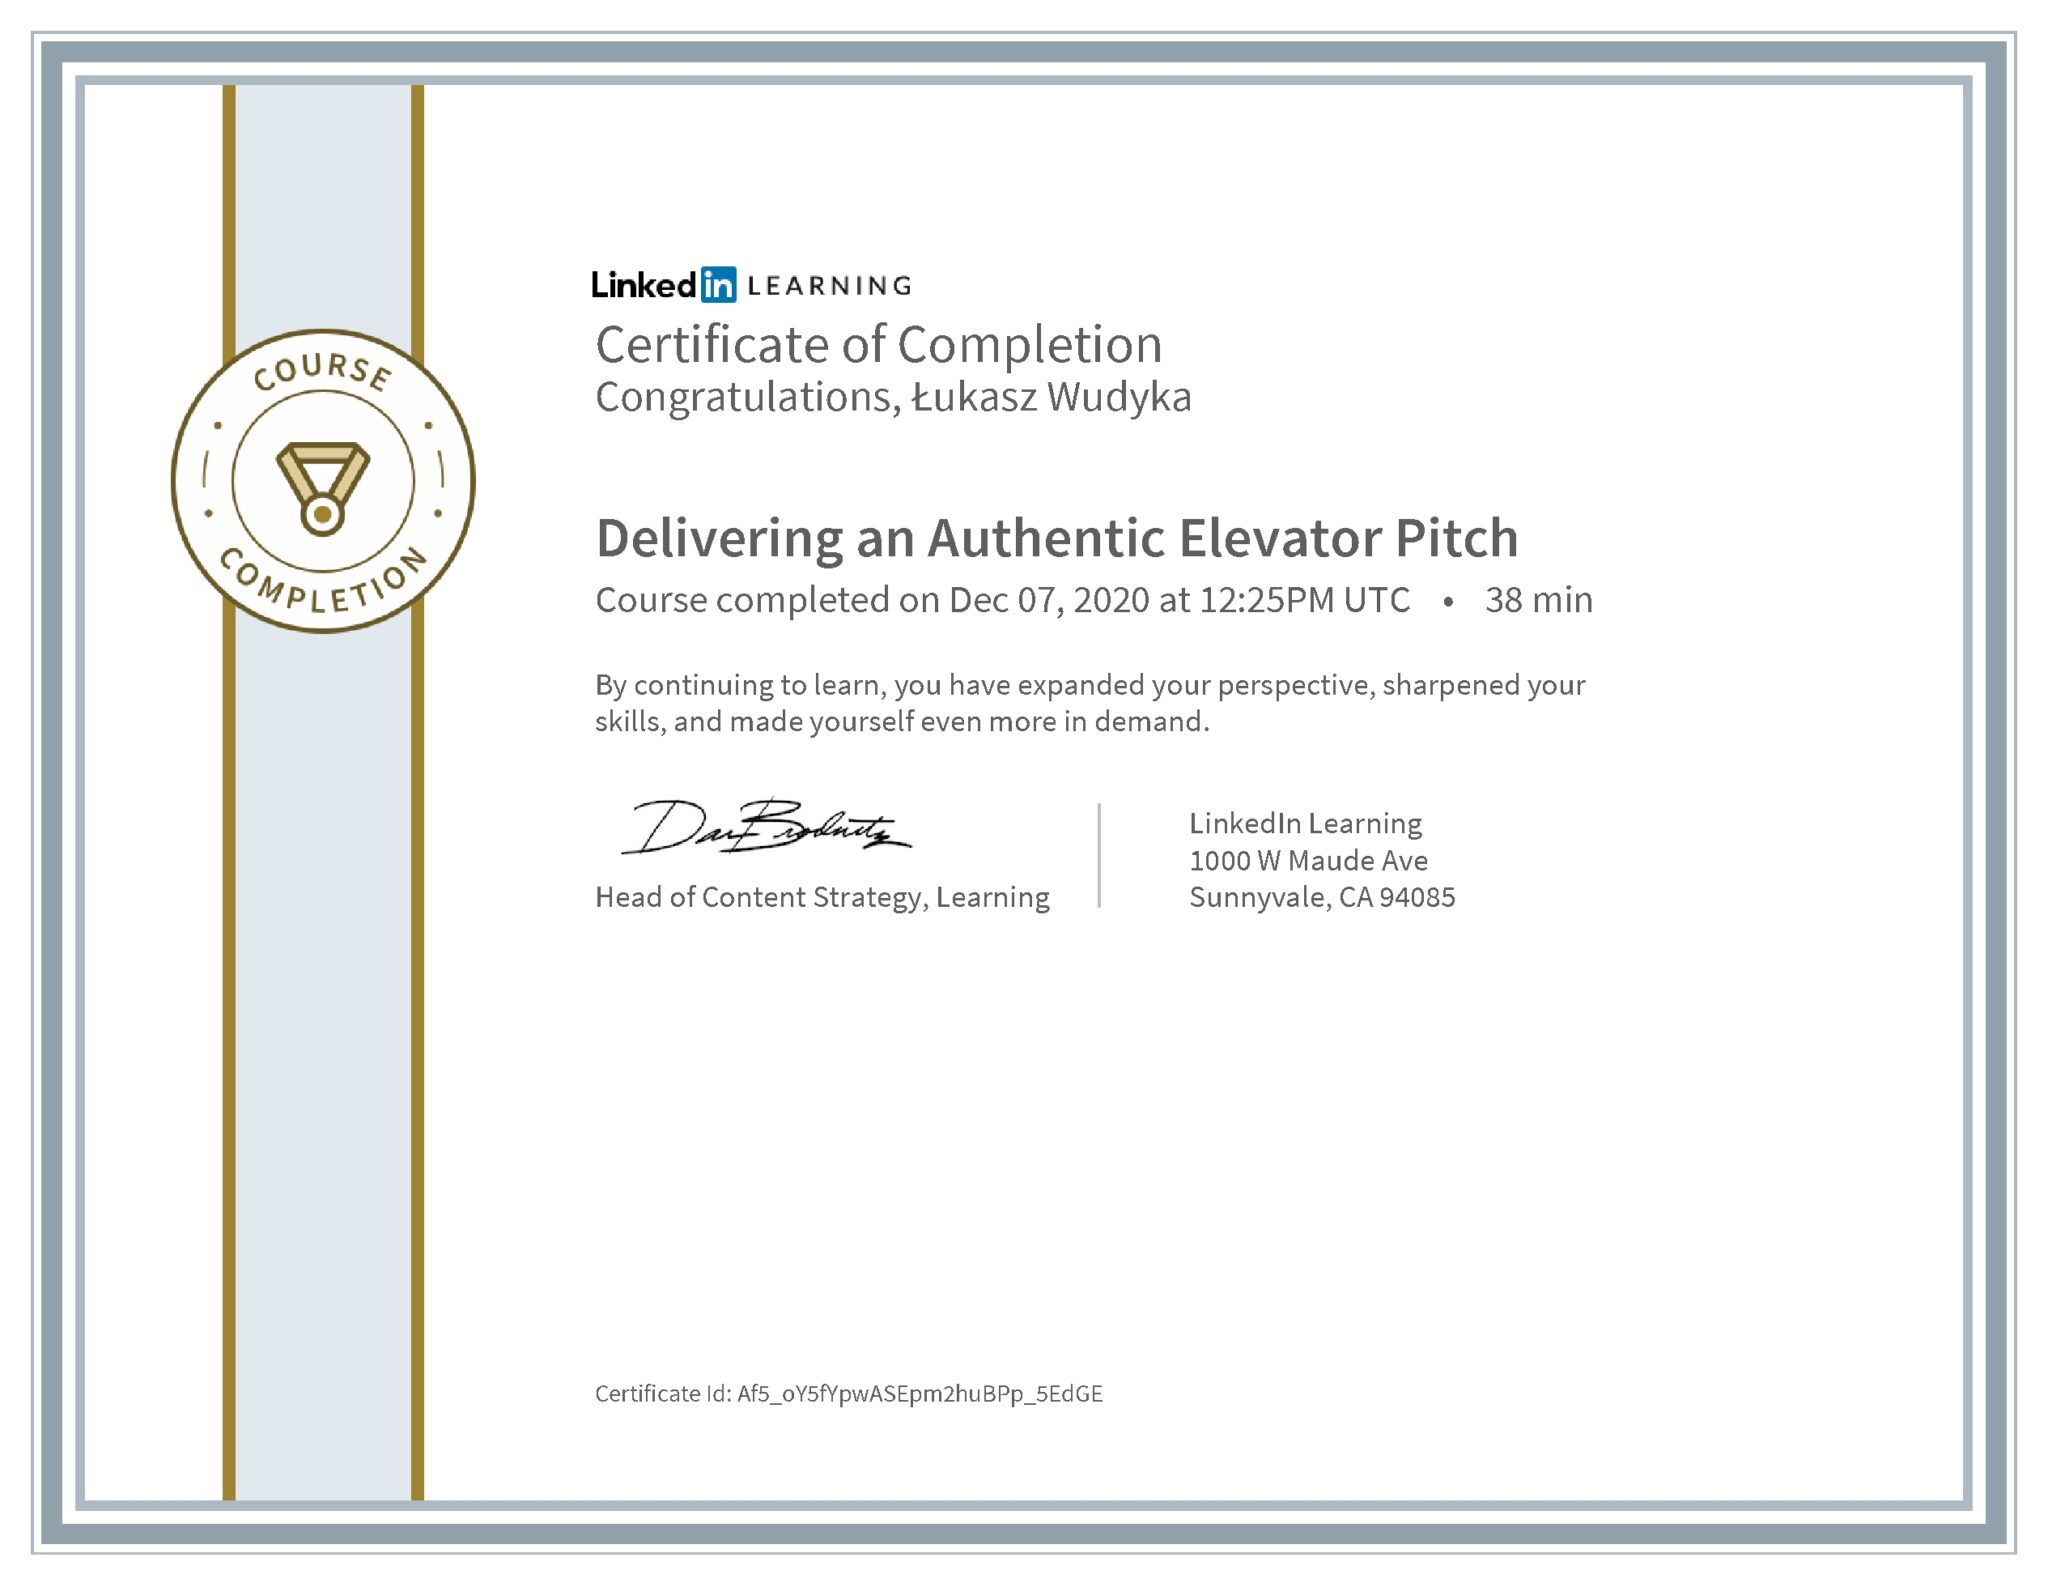 Łukasz Wudyka certyfikat LinkedIn Delivering an Authentic Elevator Pitch